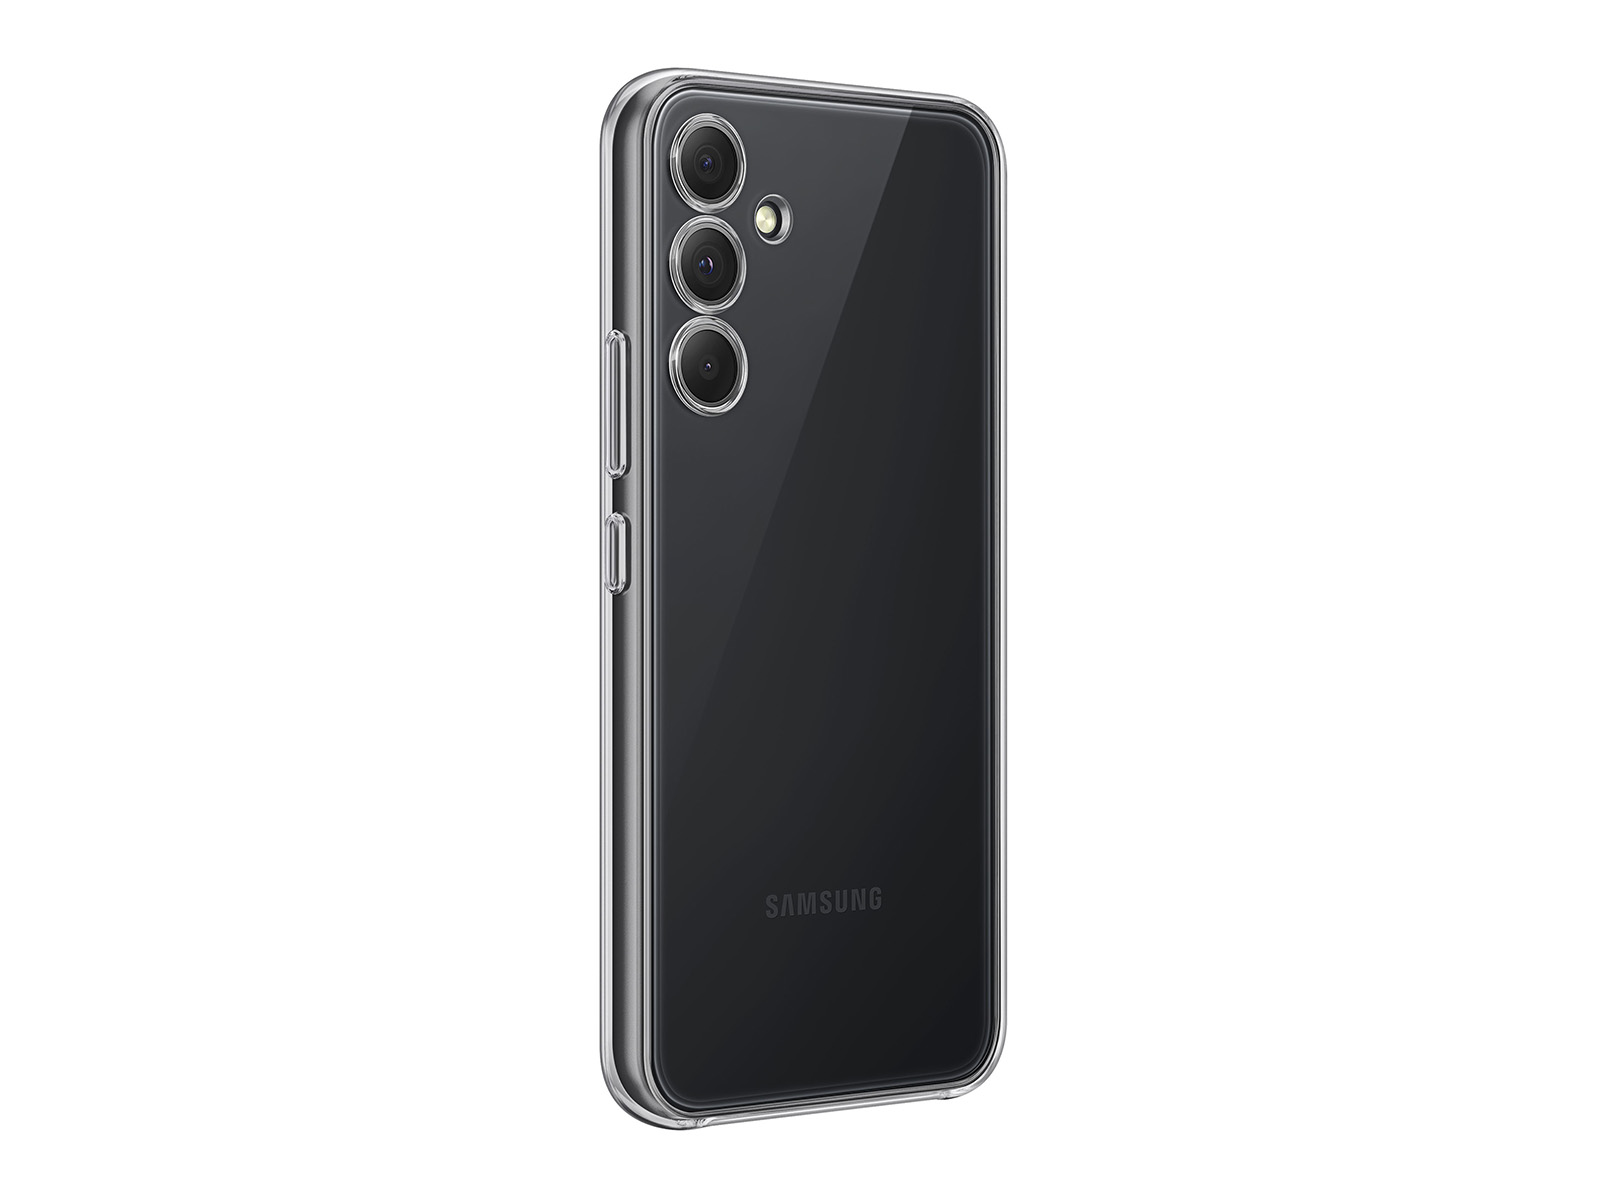 Clear Case for Galaxy A54 5G, Clear Mobile Accessories - EF-QA546CTEGUS